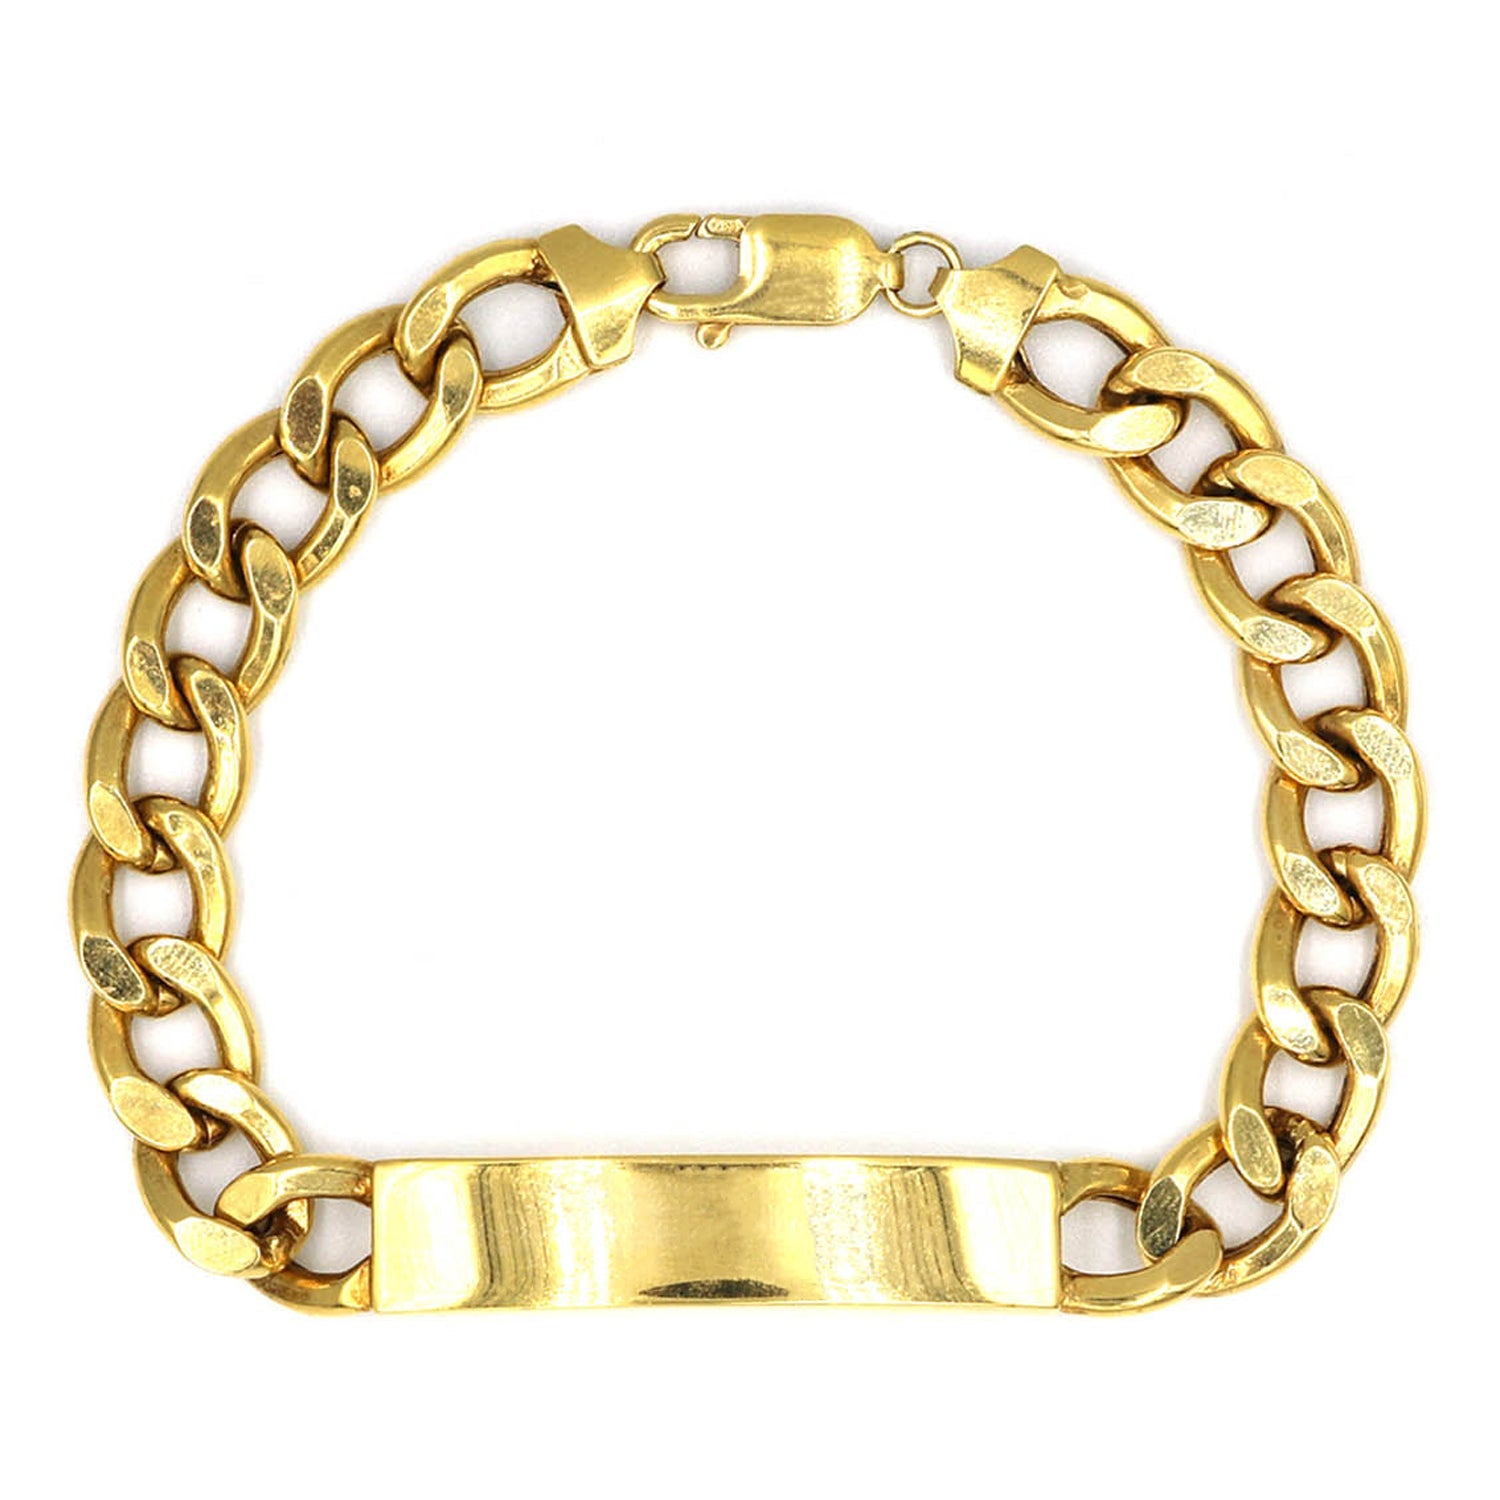 Latest Gold Bracelet Design for Man and Women